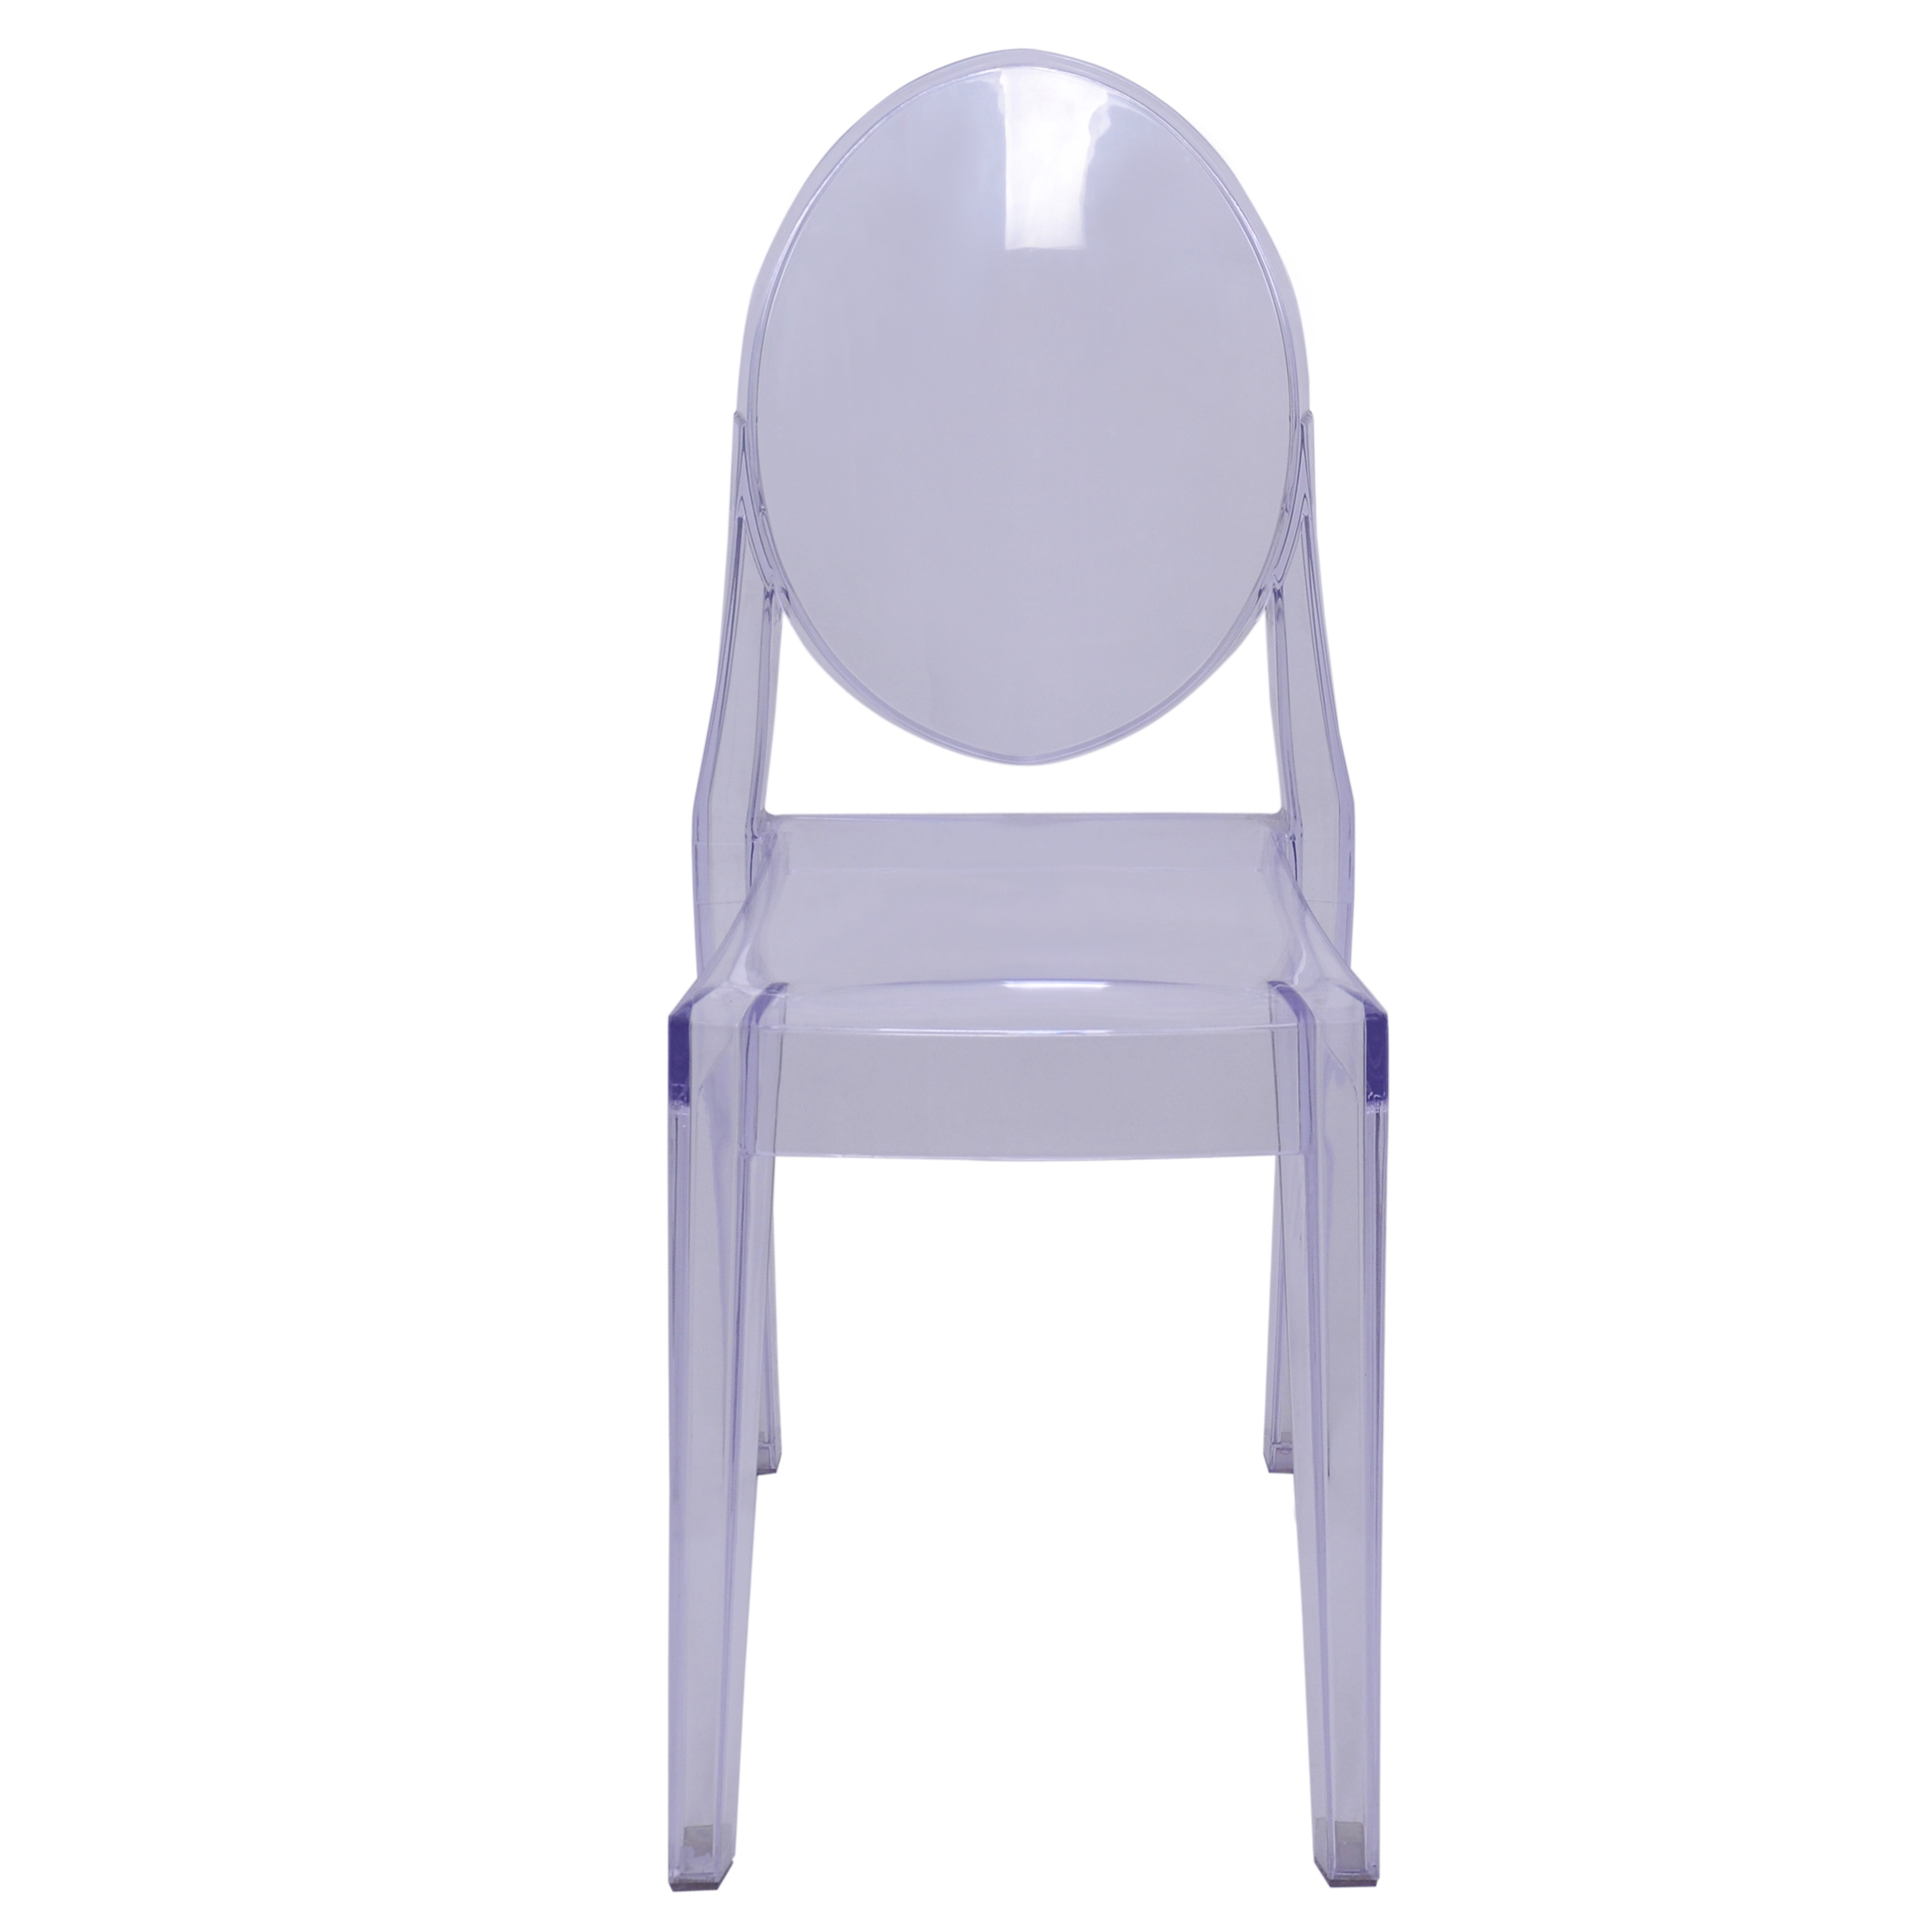 Resin Ghost Chair